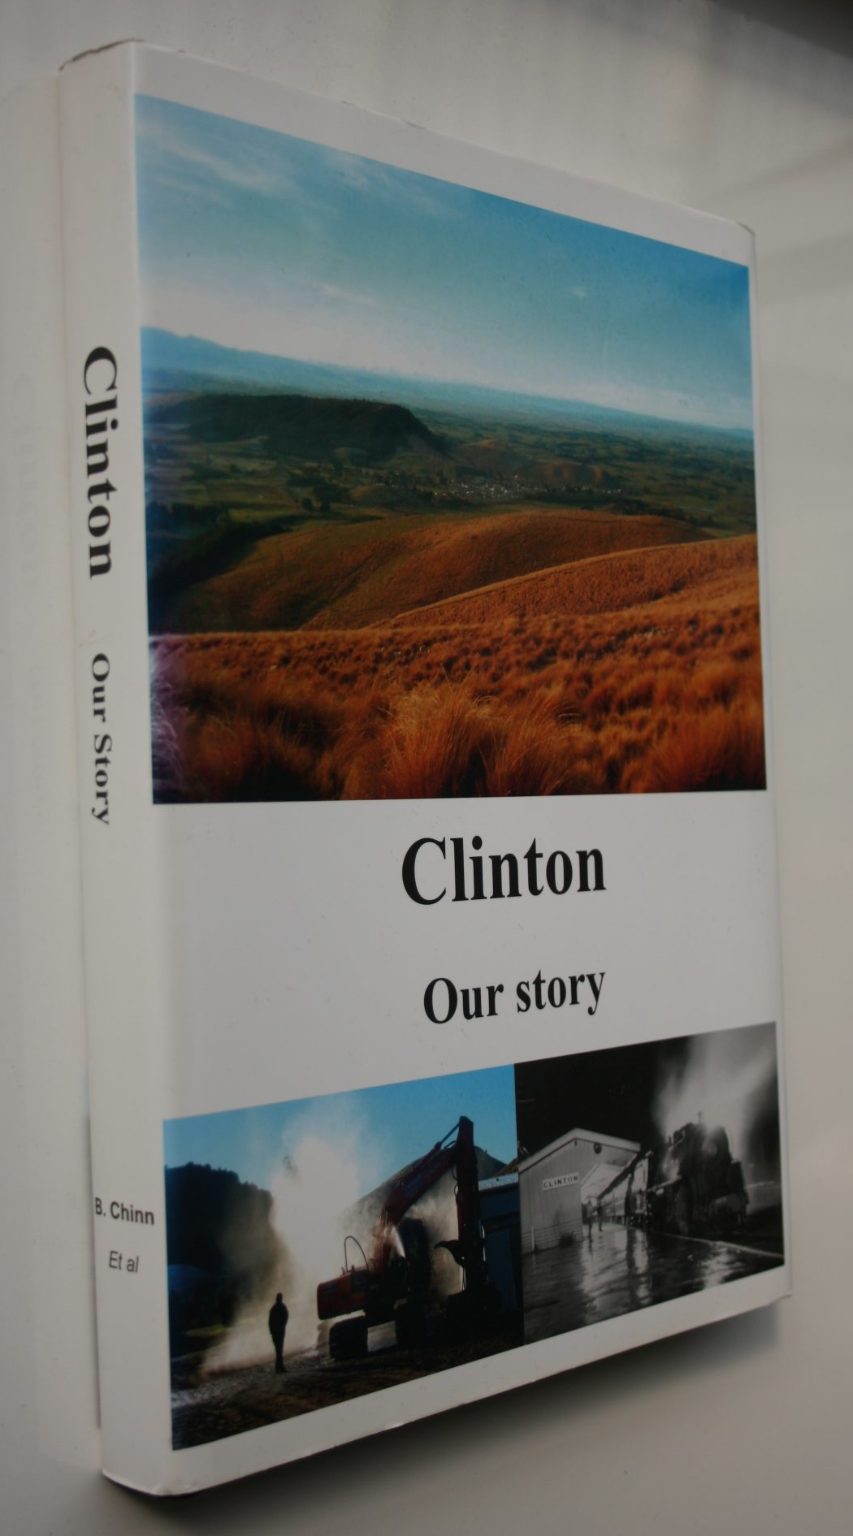 Clinton: Our Story by Barbara Chinn.